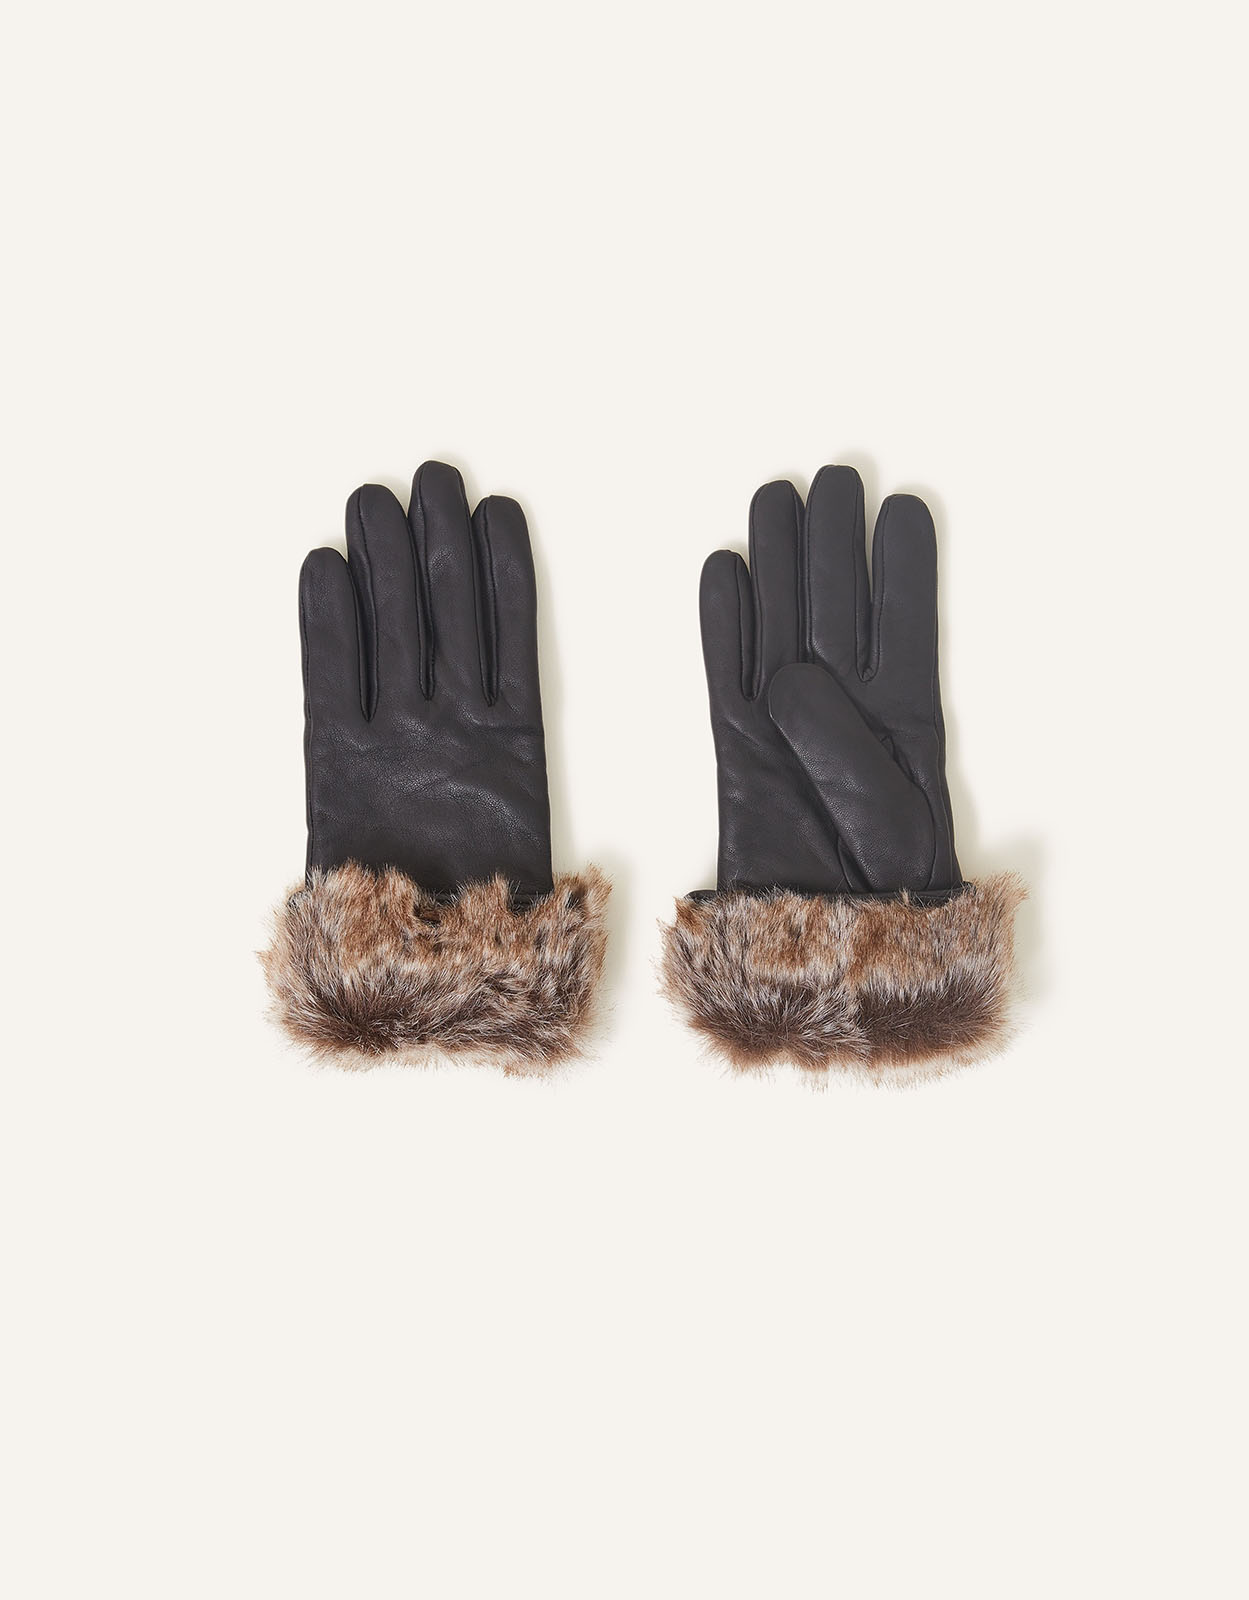 Accessorize Black and Grey Leather Faux Fur Trim Gloves, Size: M / L